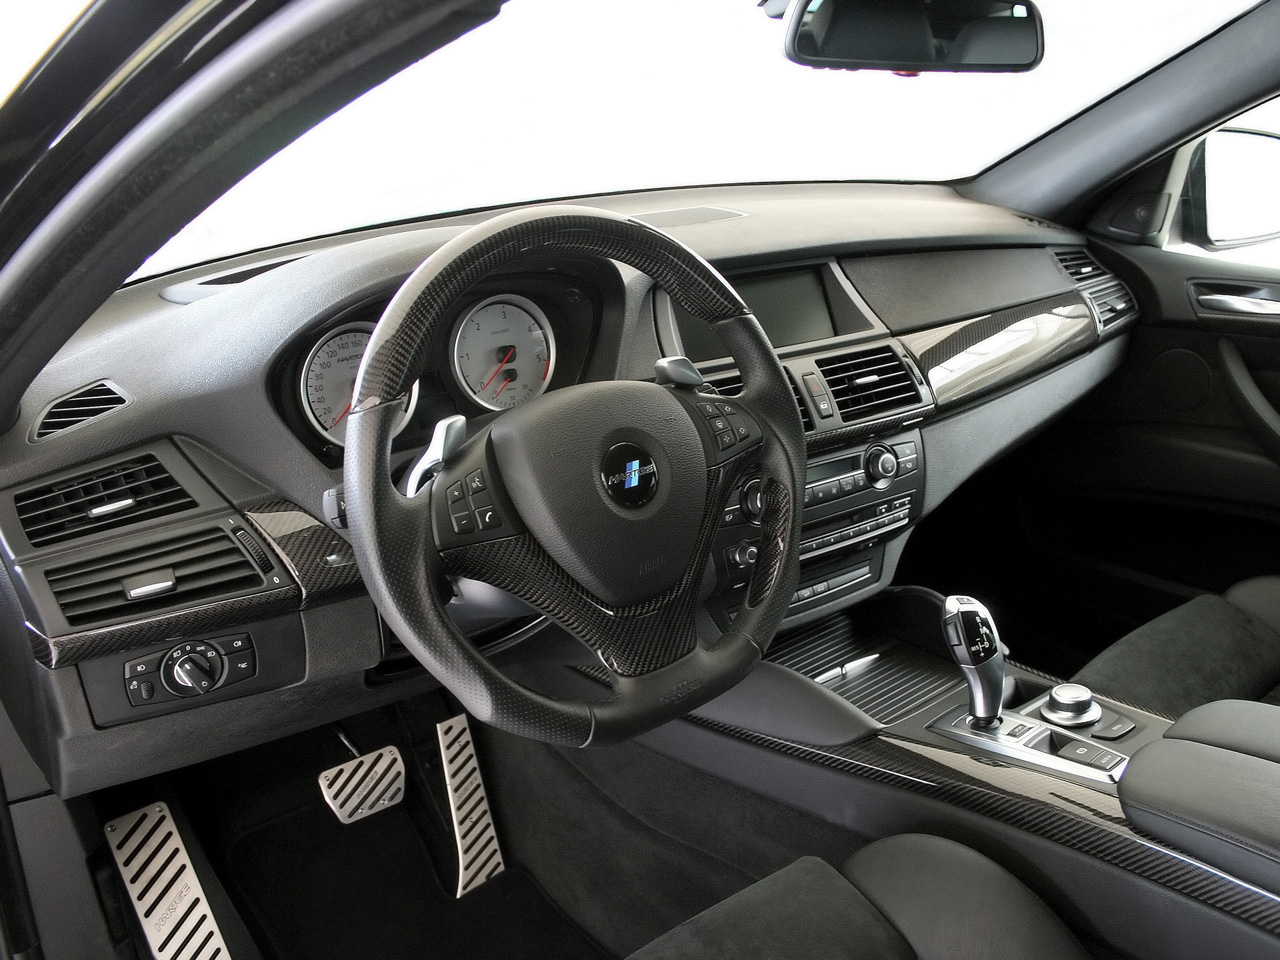 2010 Hartge BMW X6 M